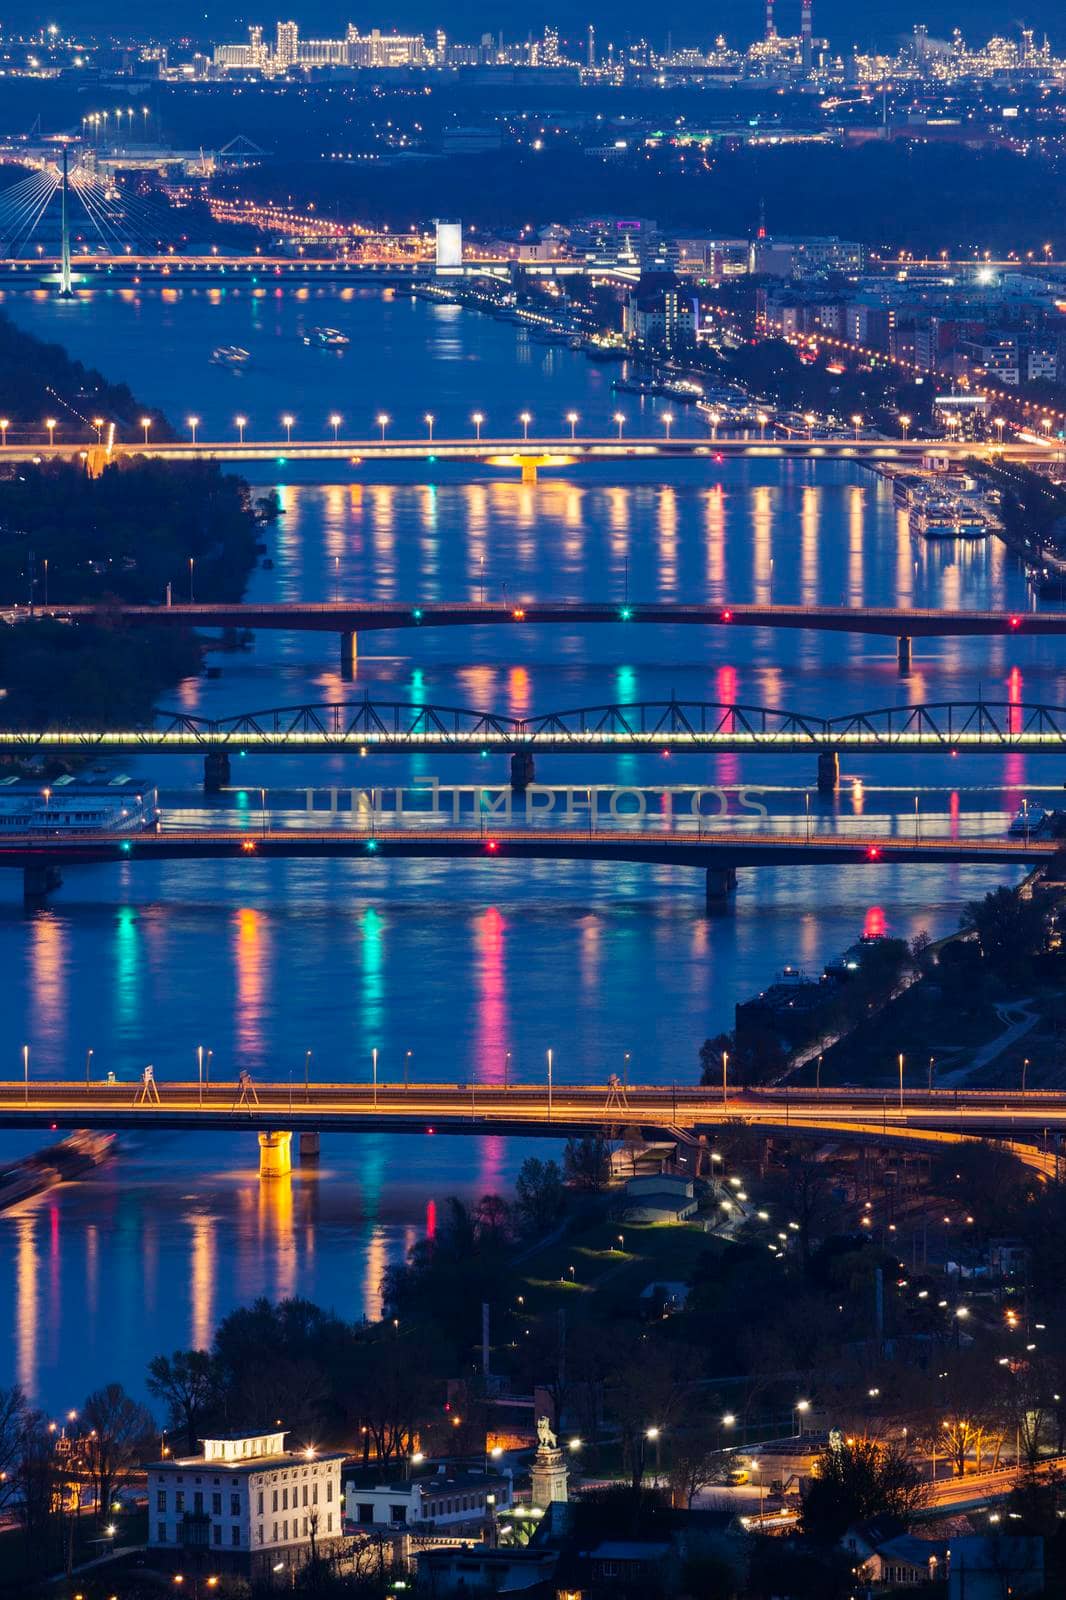 Bridges on Danube River seen at night. Vienna, Austria.